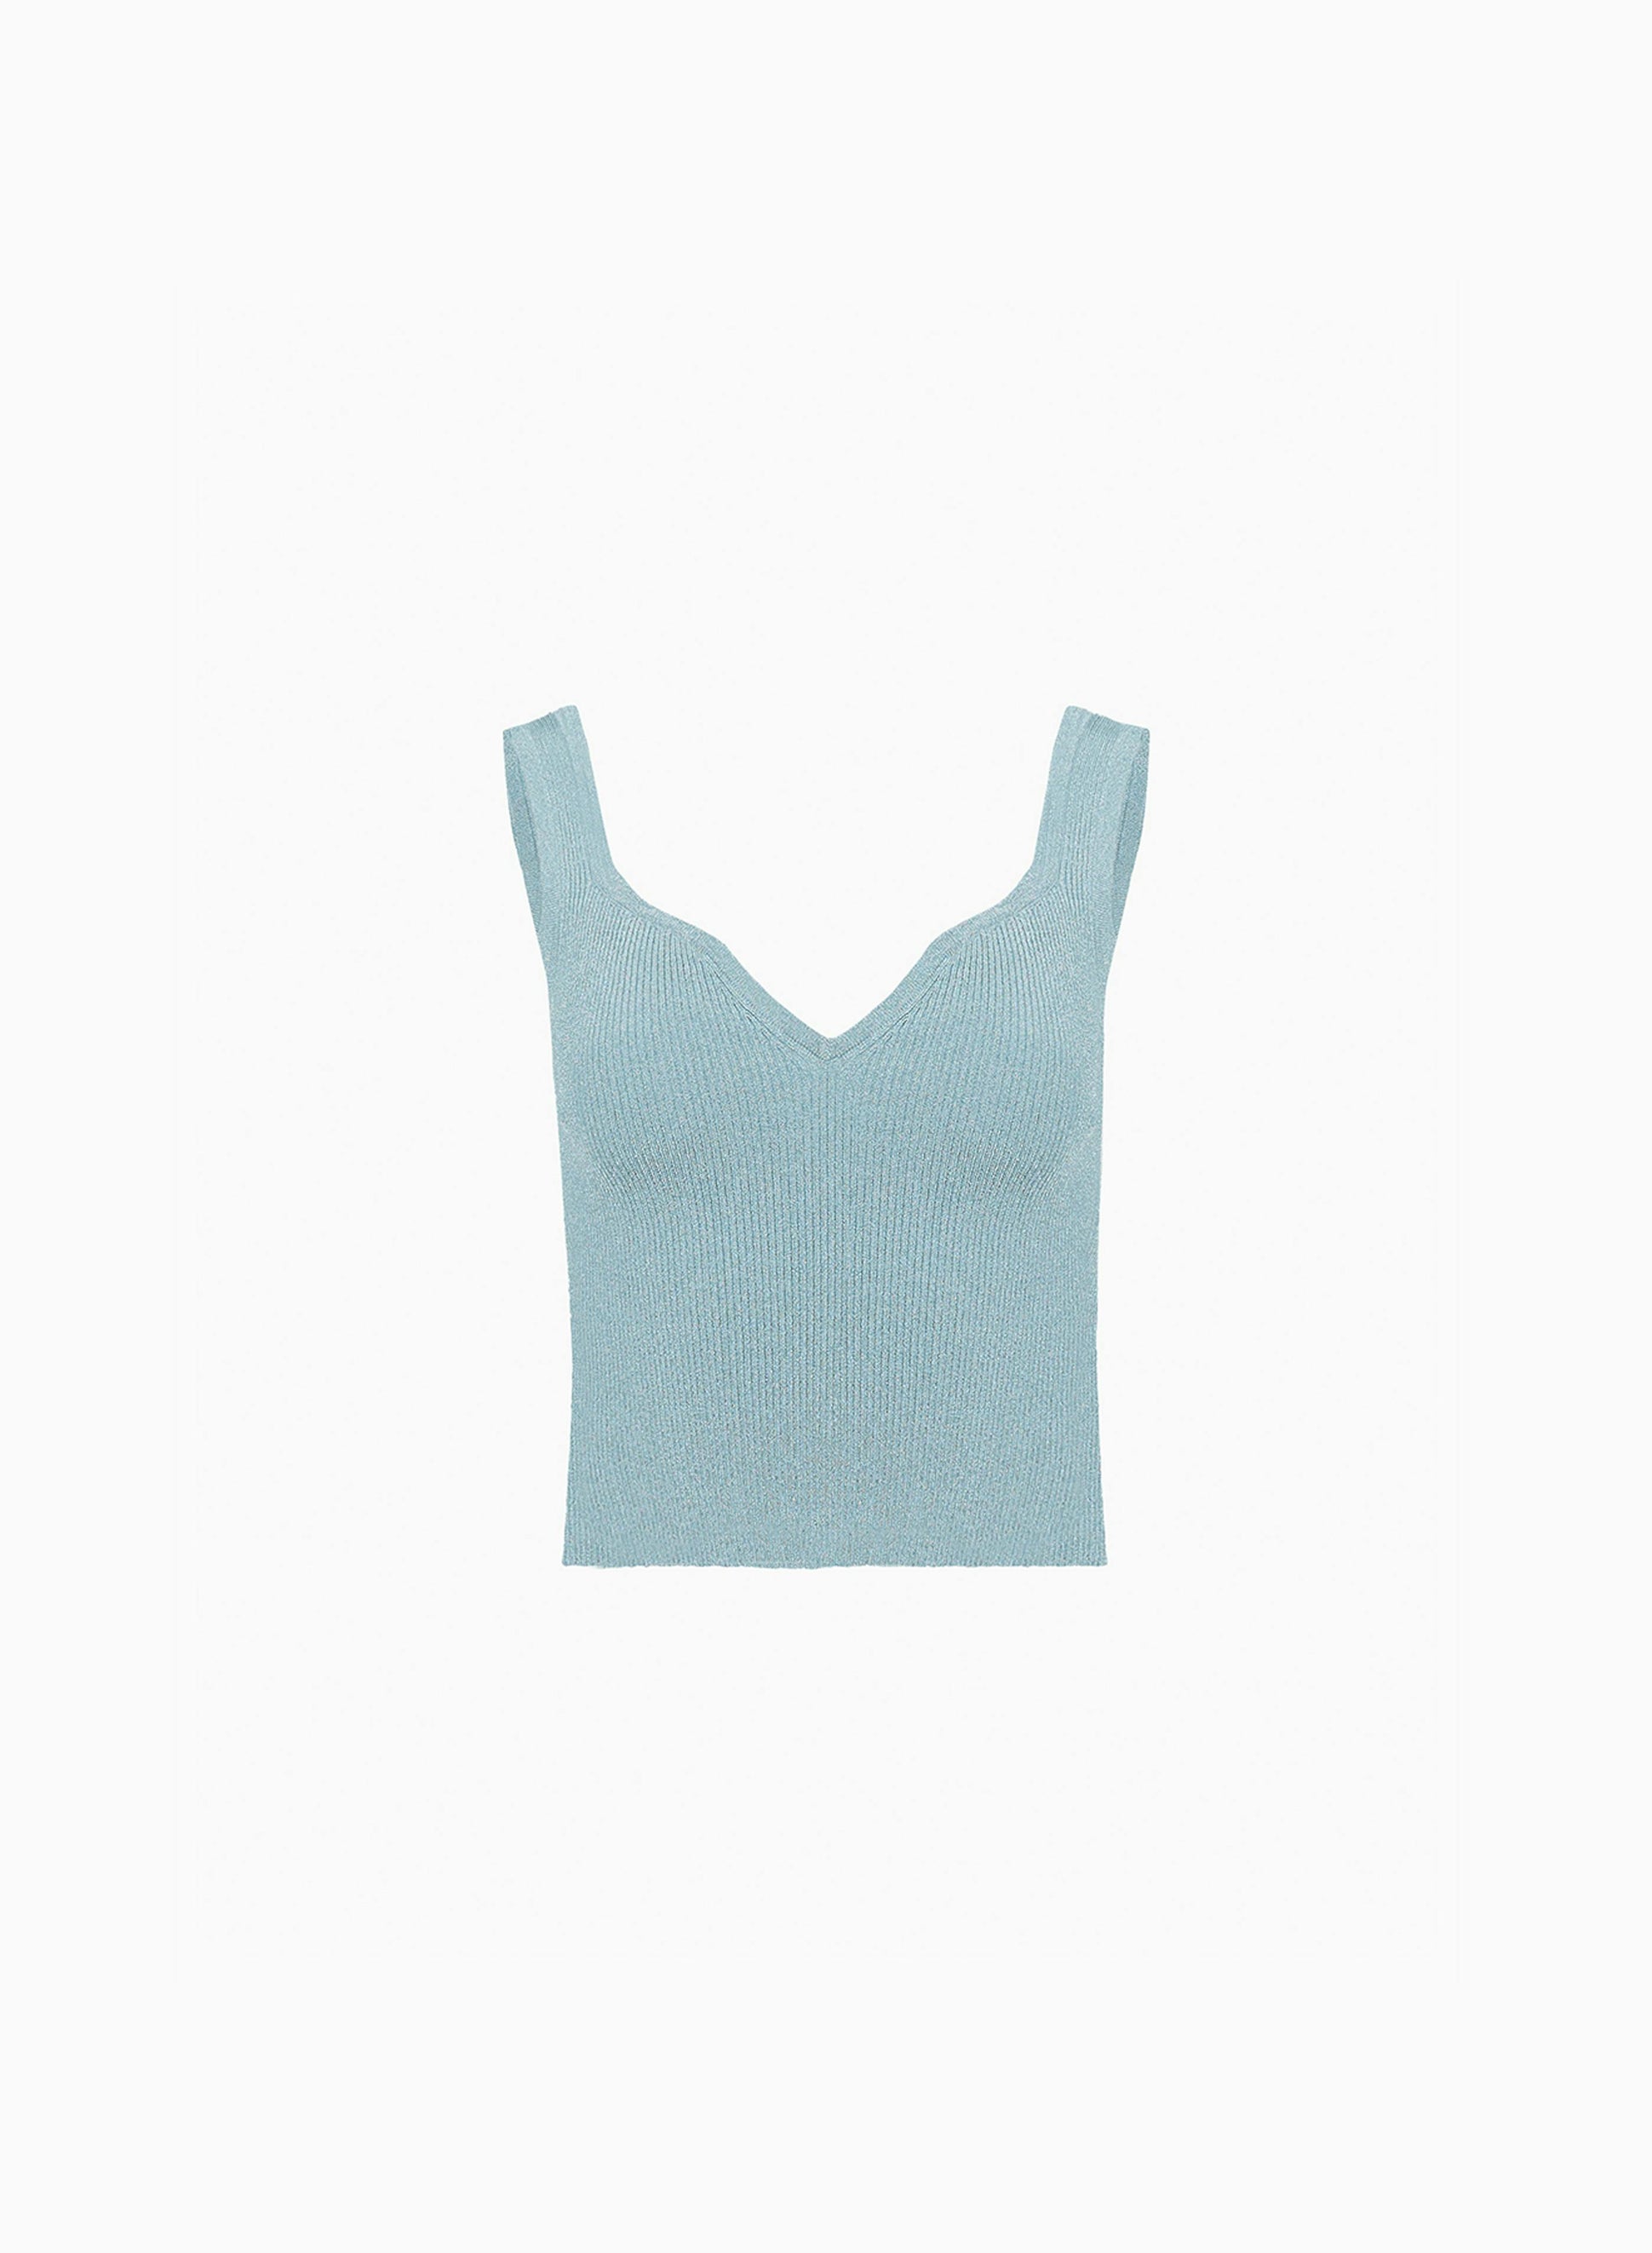 Sleeveless heart neckline top in light blue - Nina Ricci